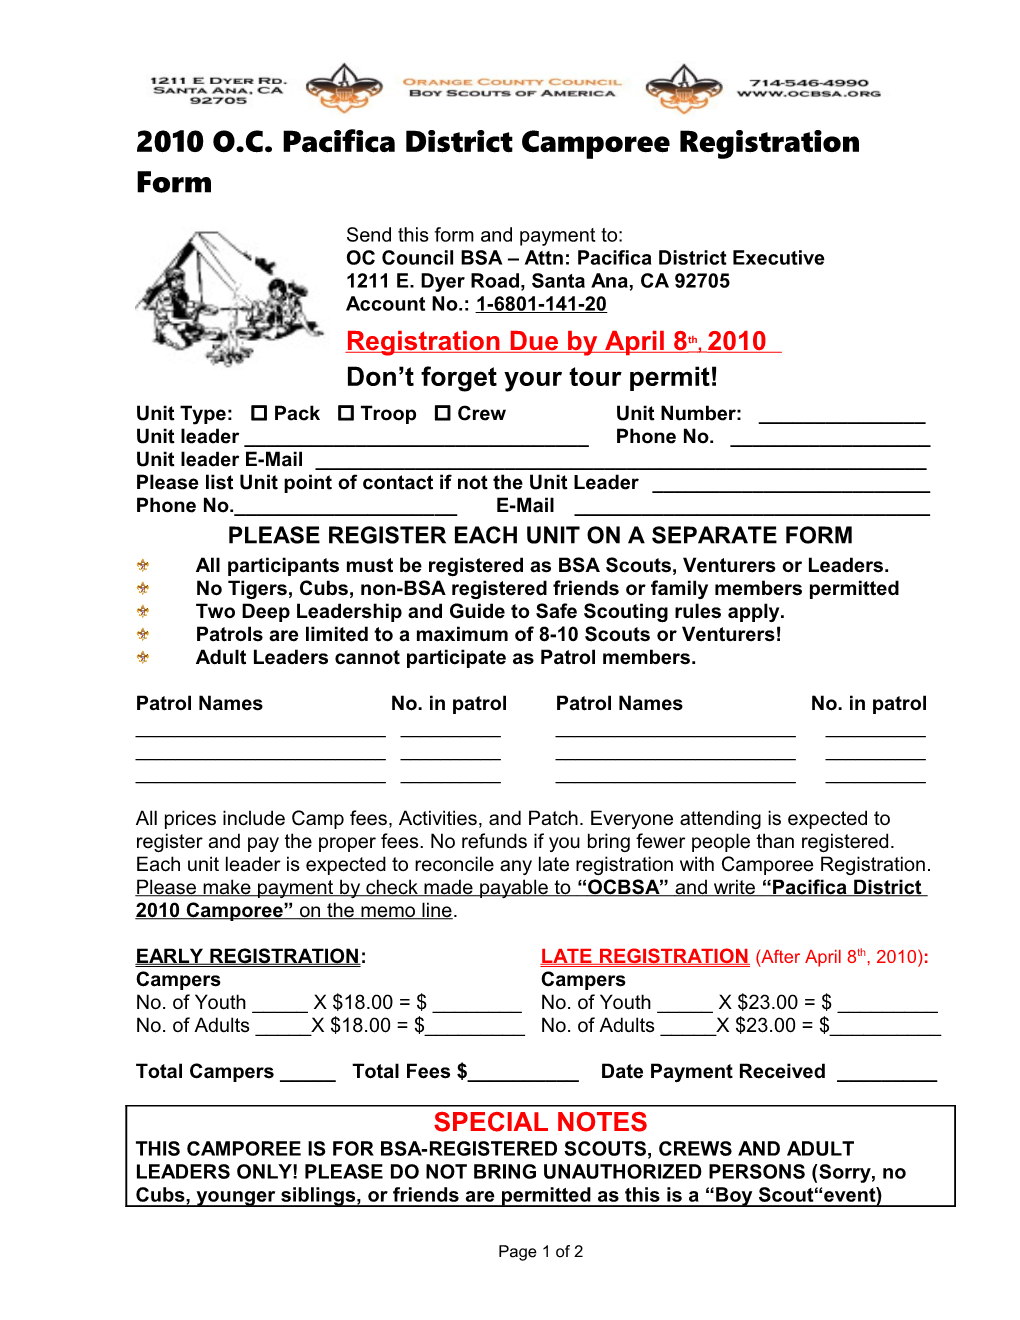 2010 O.C. Pacifica District Camporee Registration Form